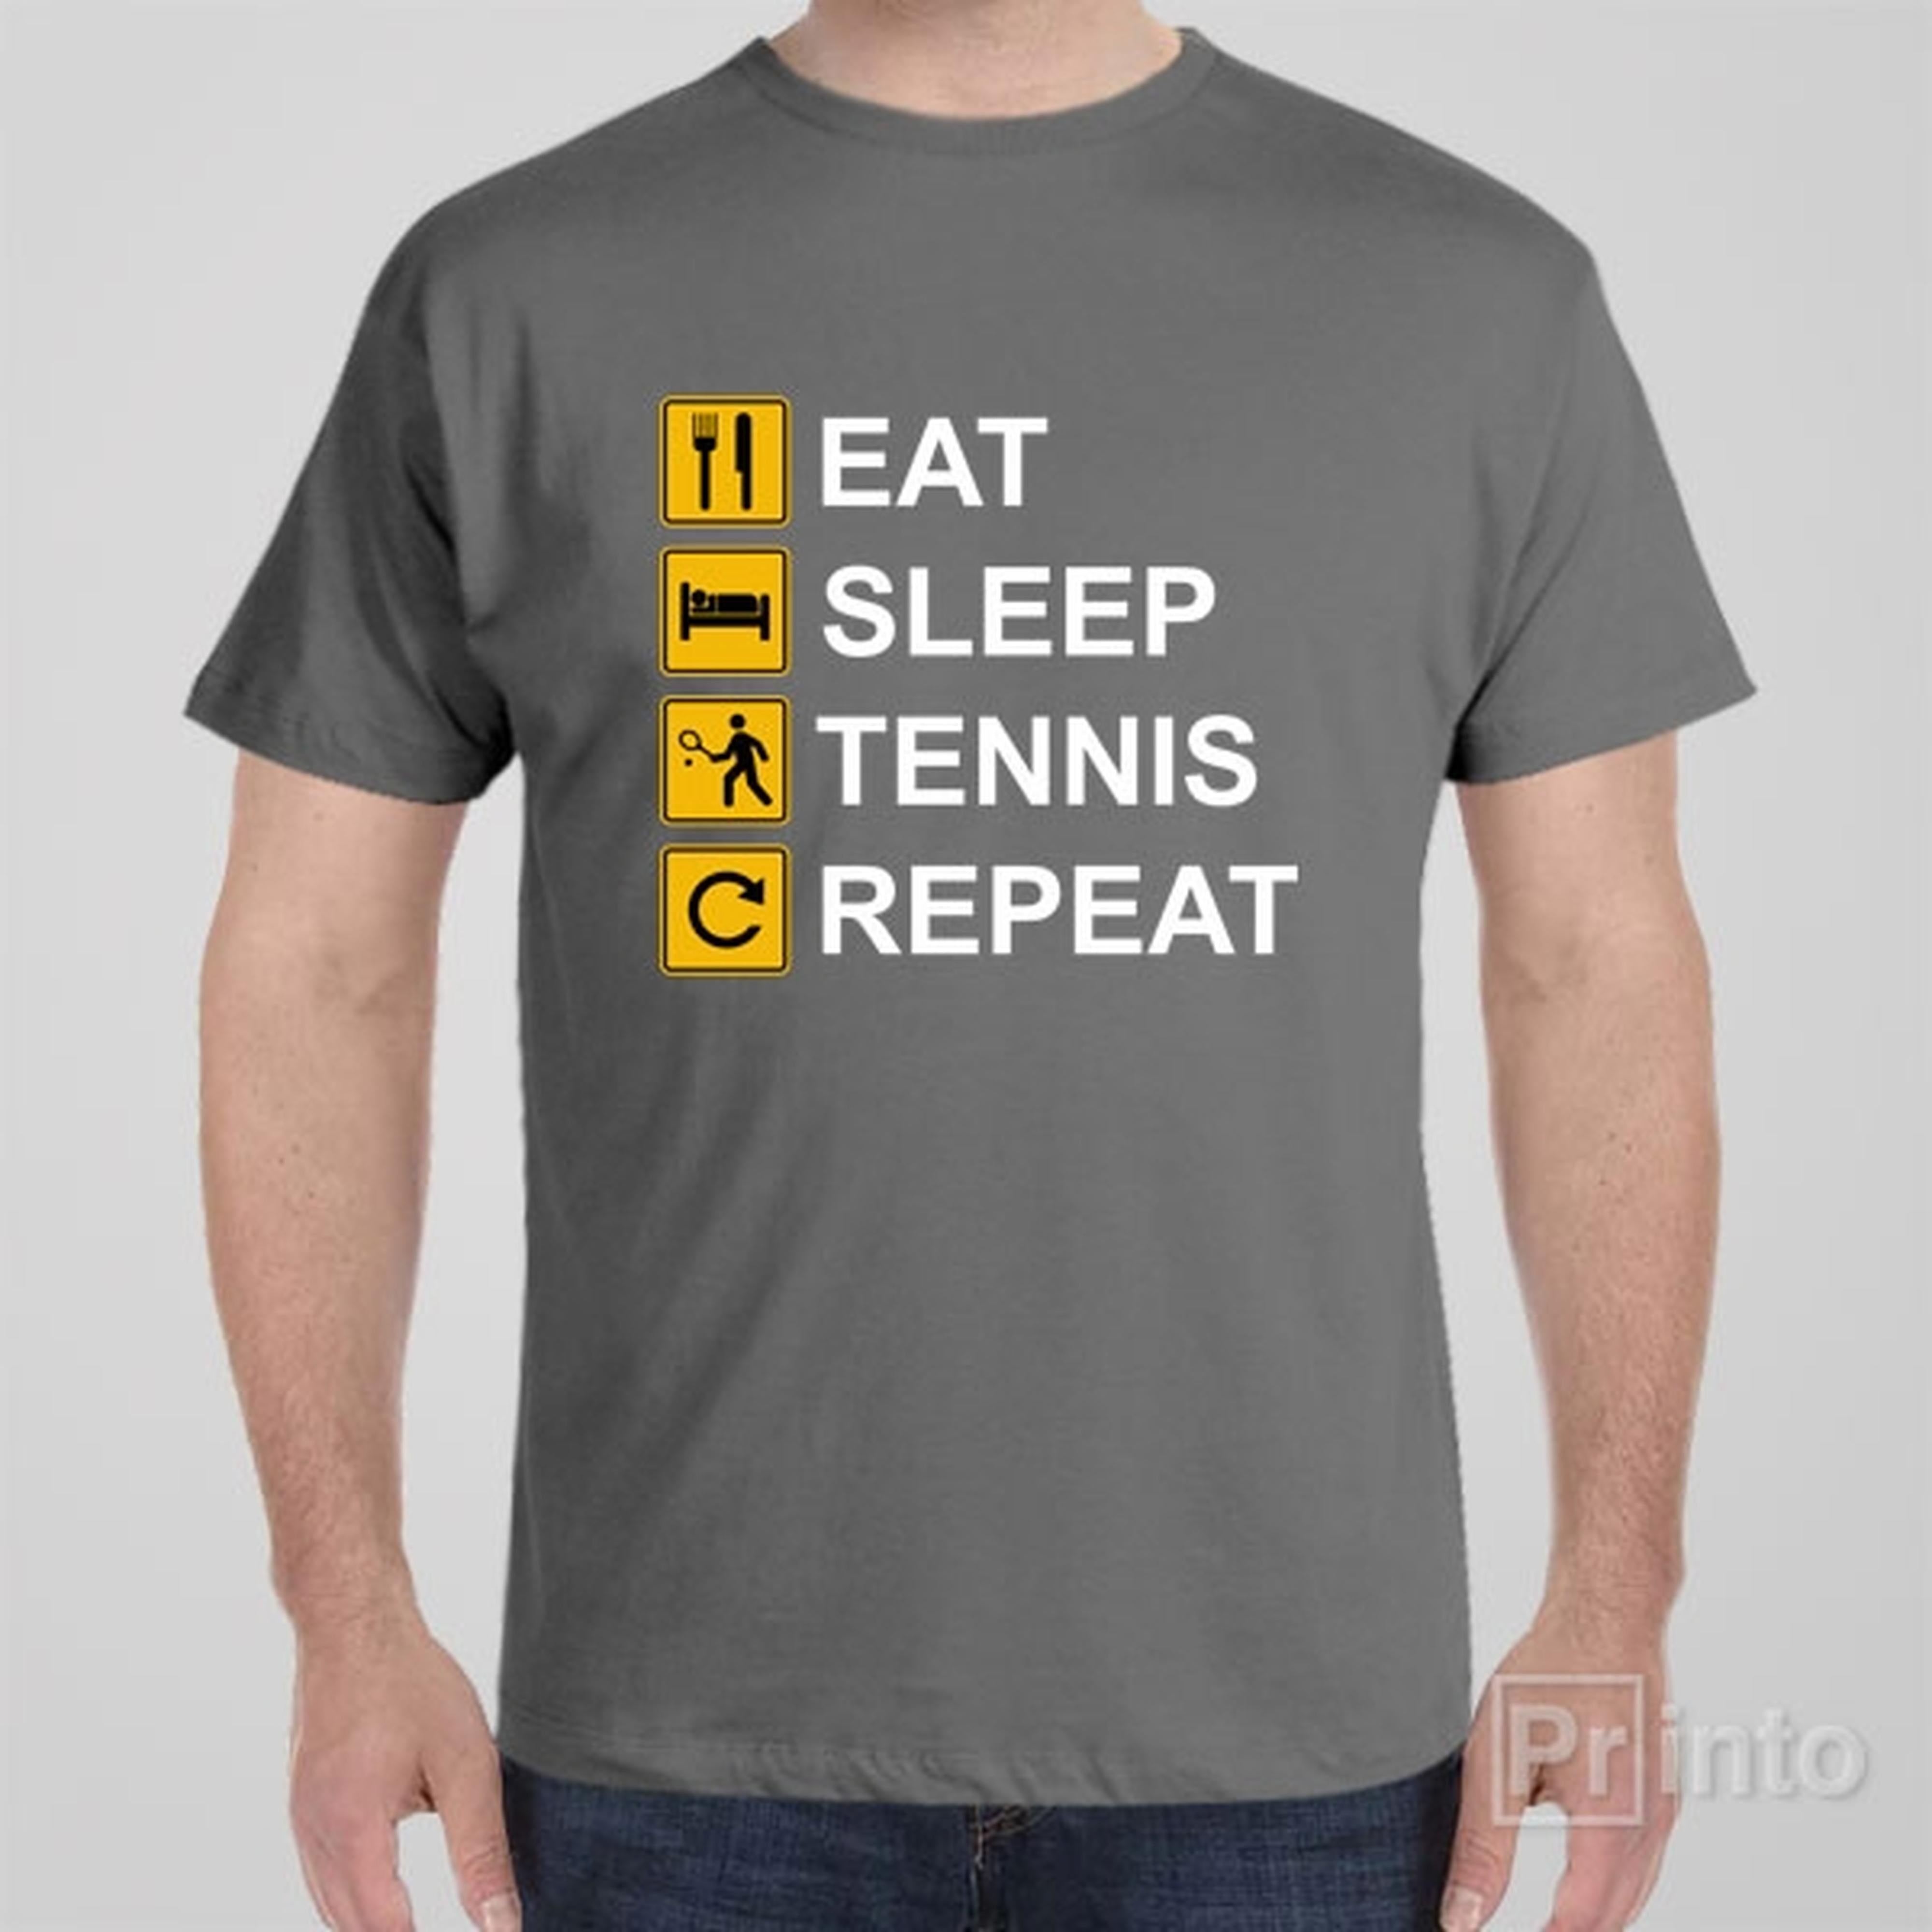 eat-sleep-tennis-repeat-t-shirt